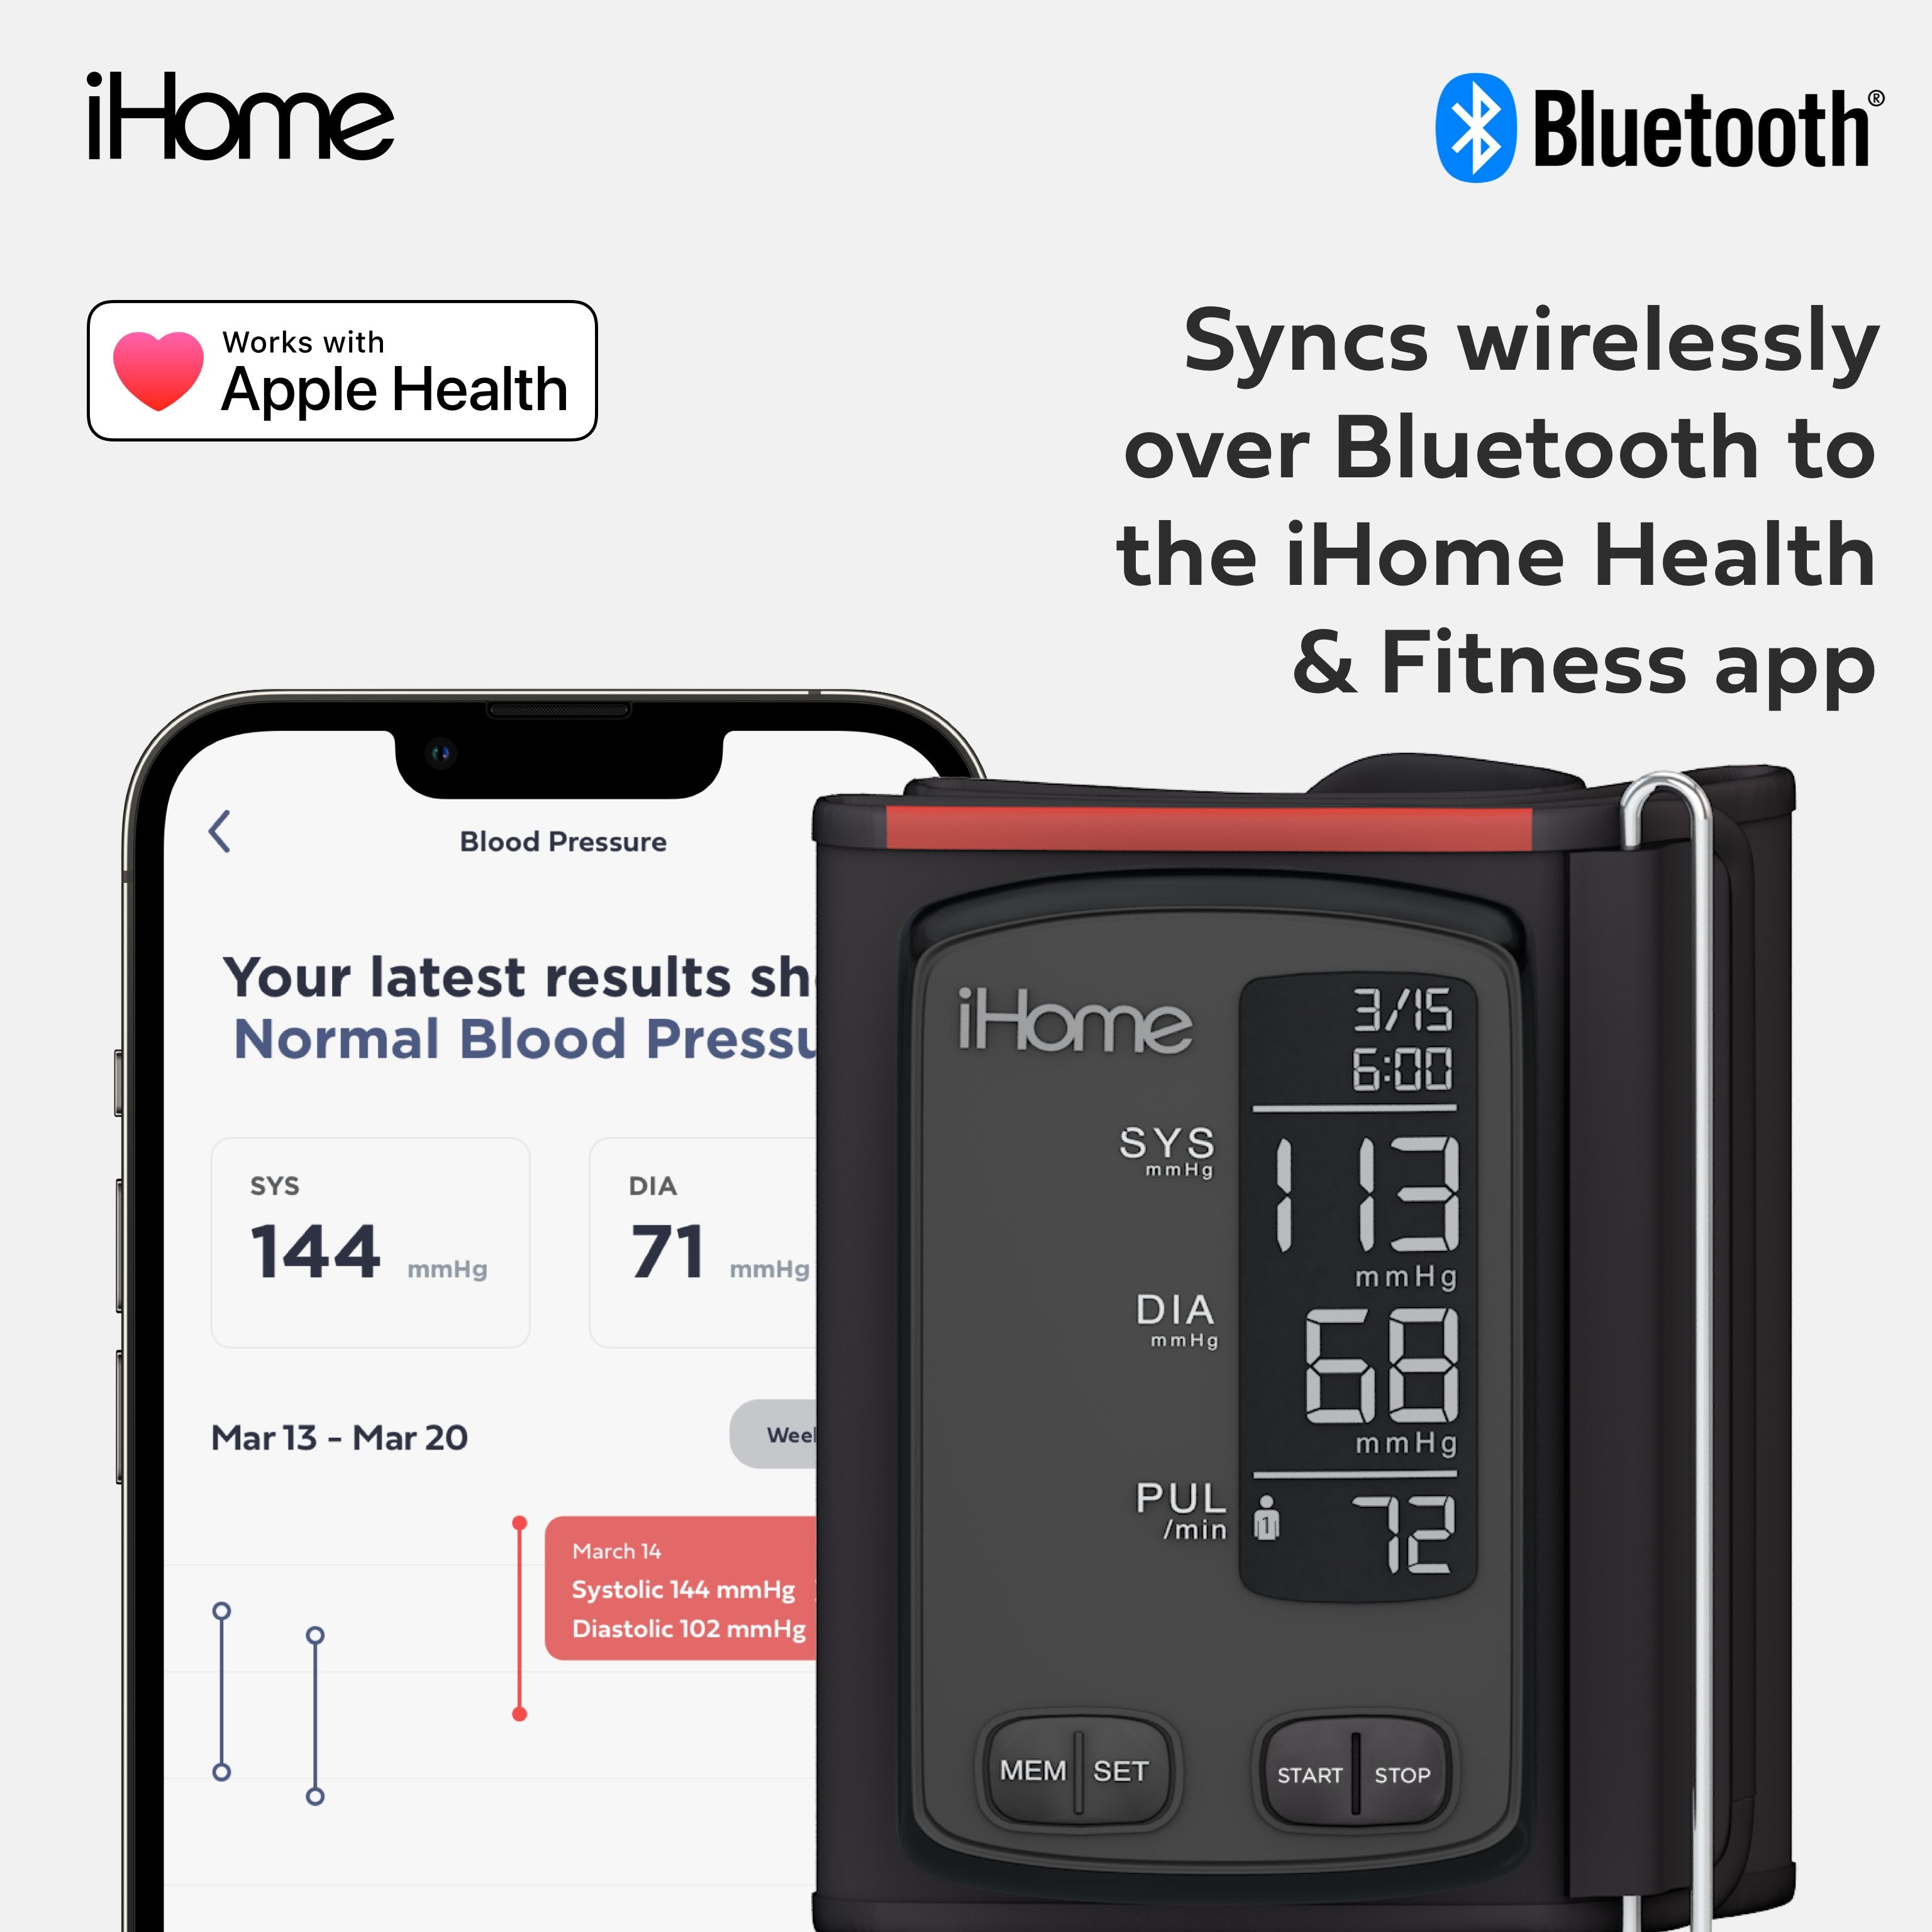 Smart Blood Pressure App